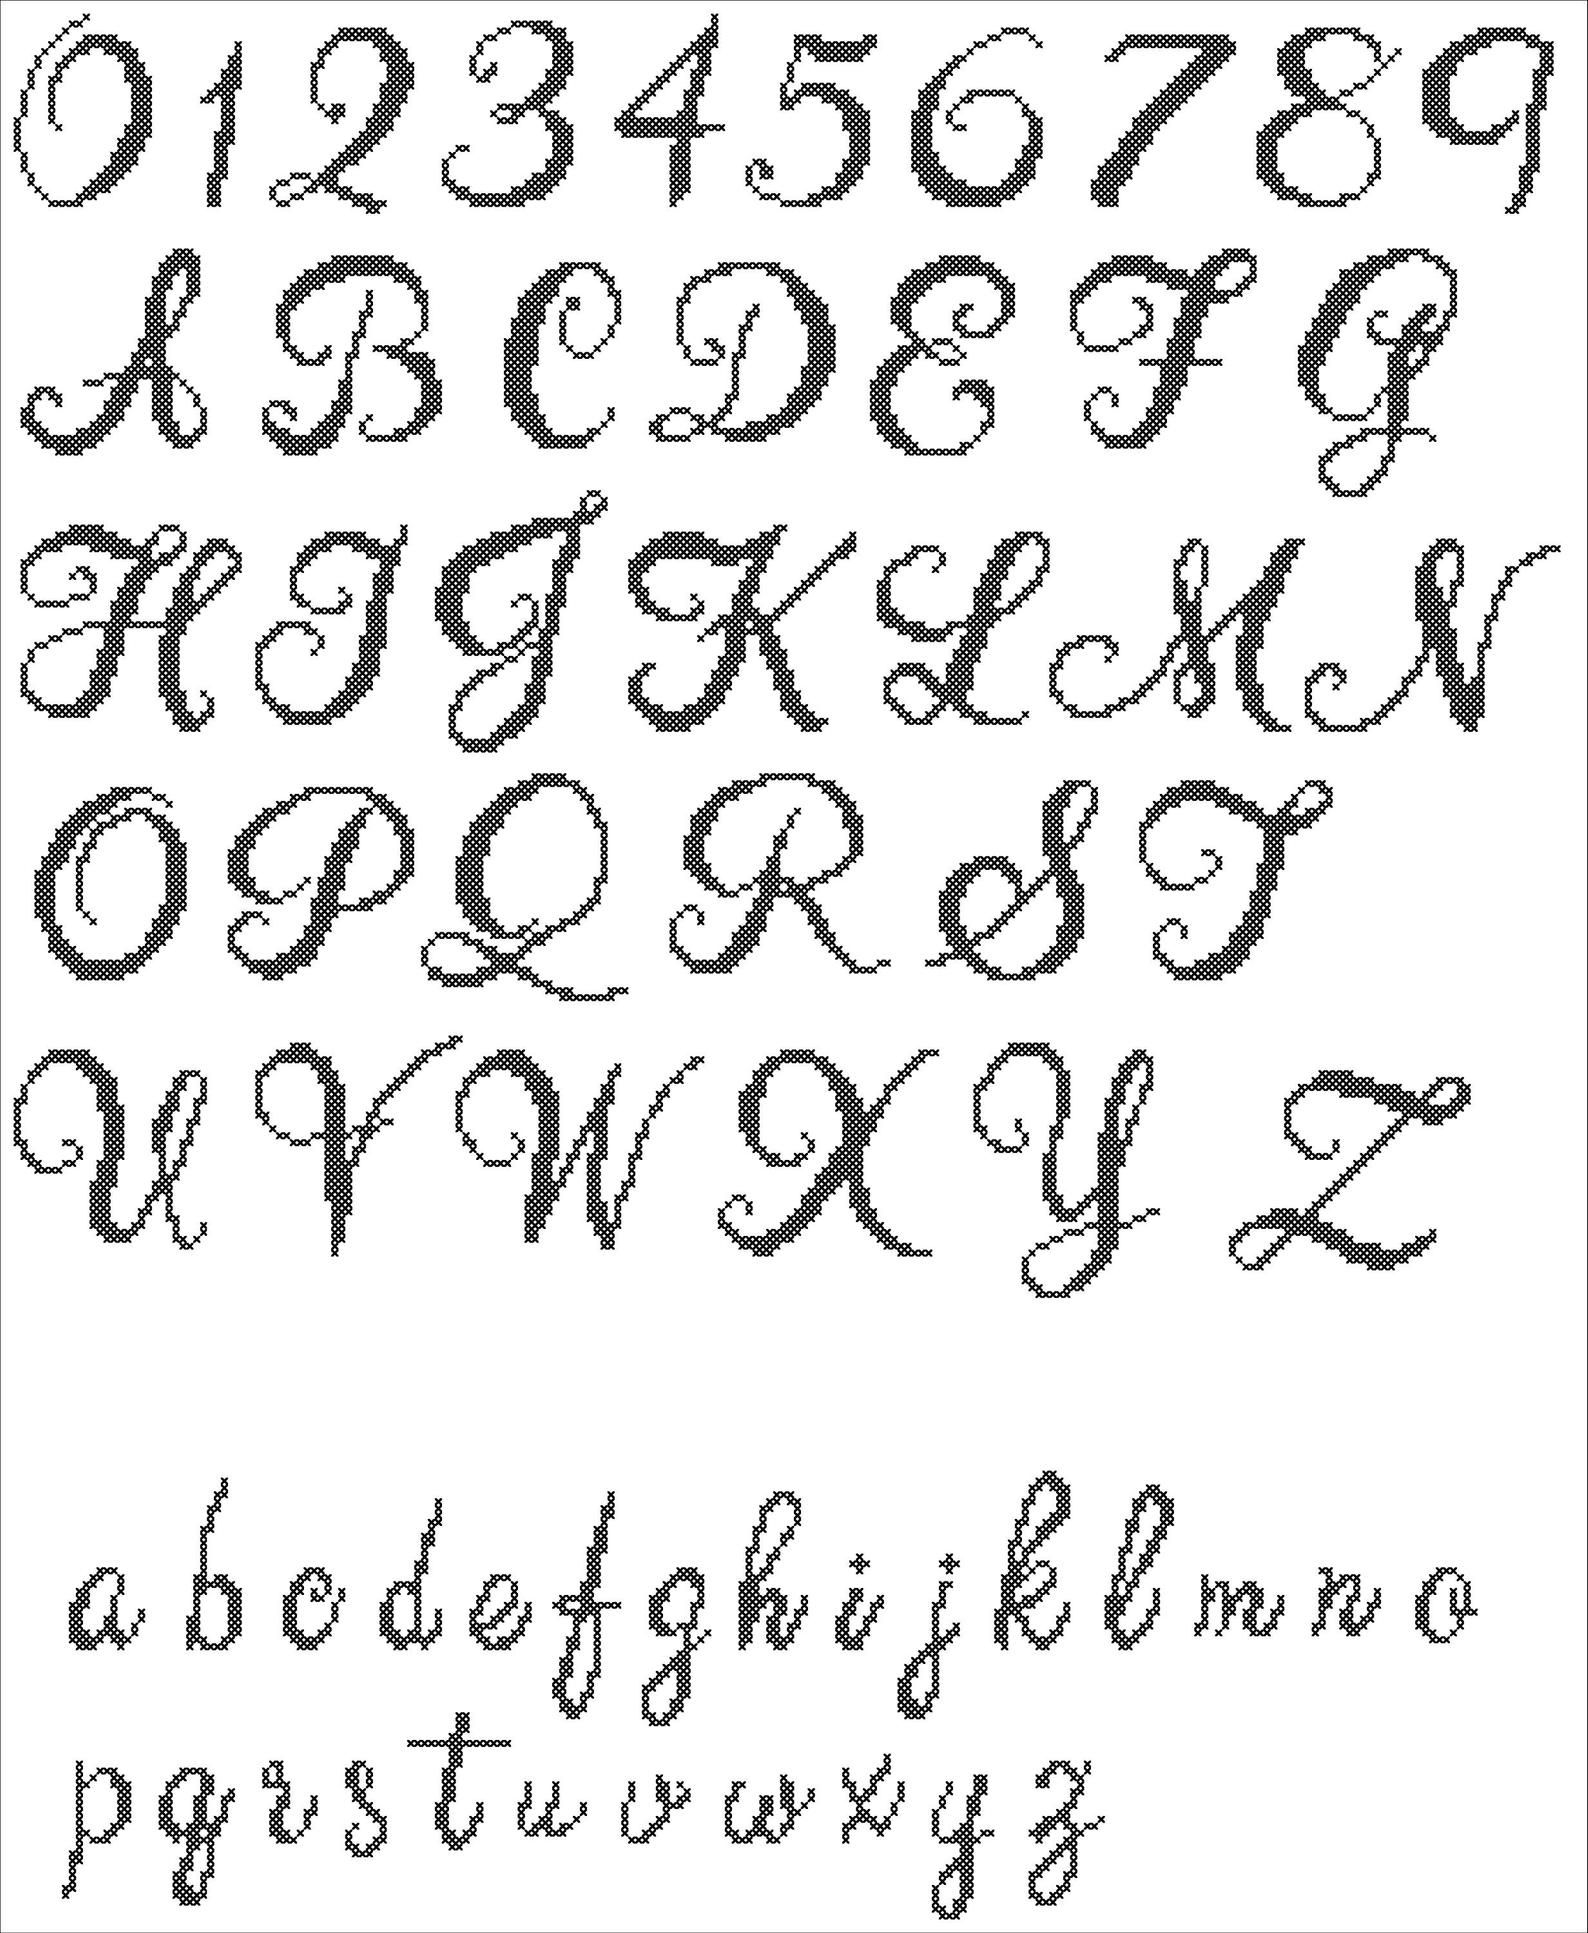 Handwriting Alphabet Cross Stitch Pattern Pdf Written Font